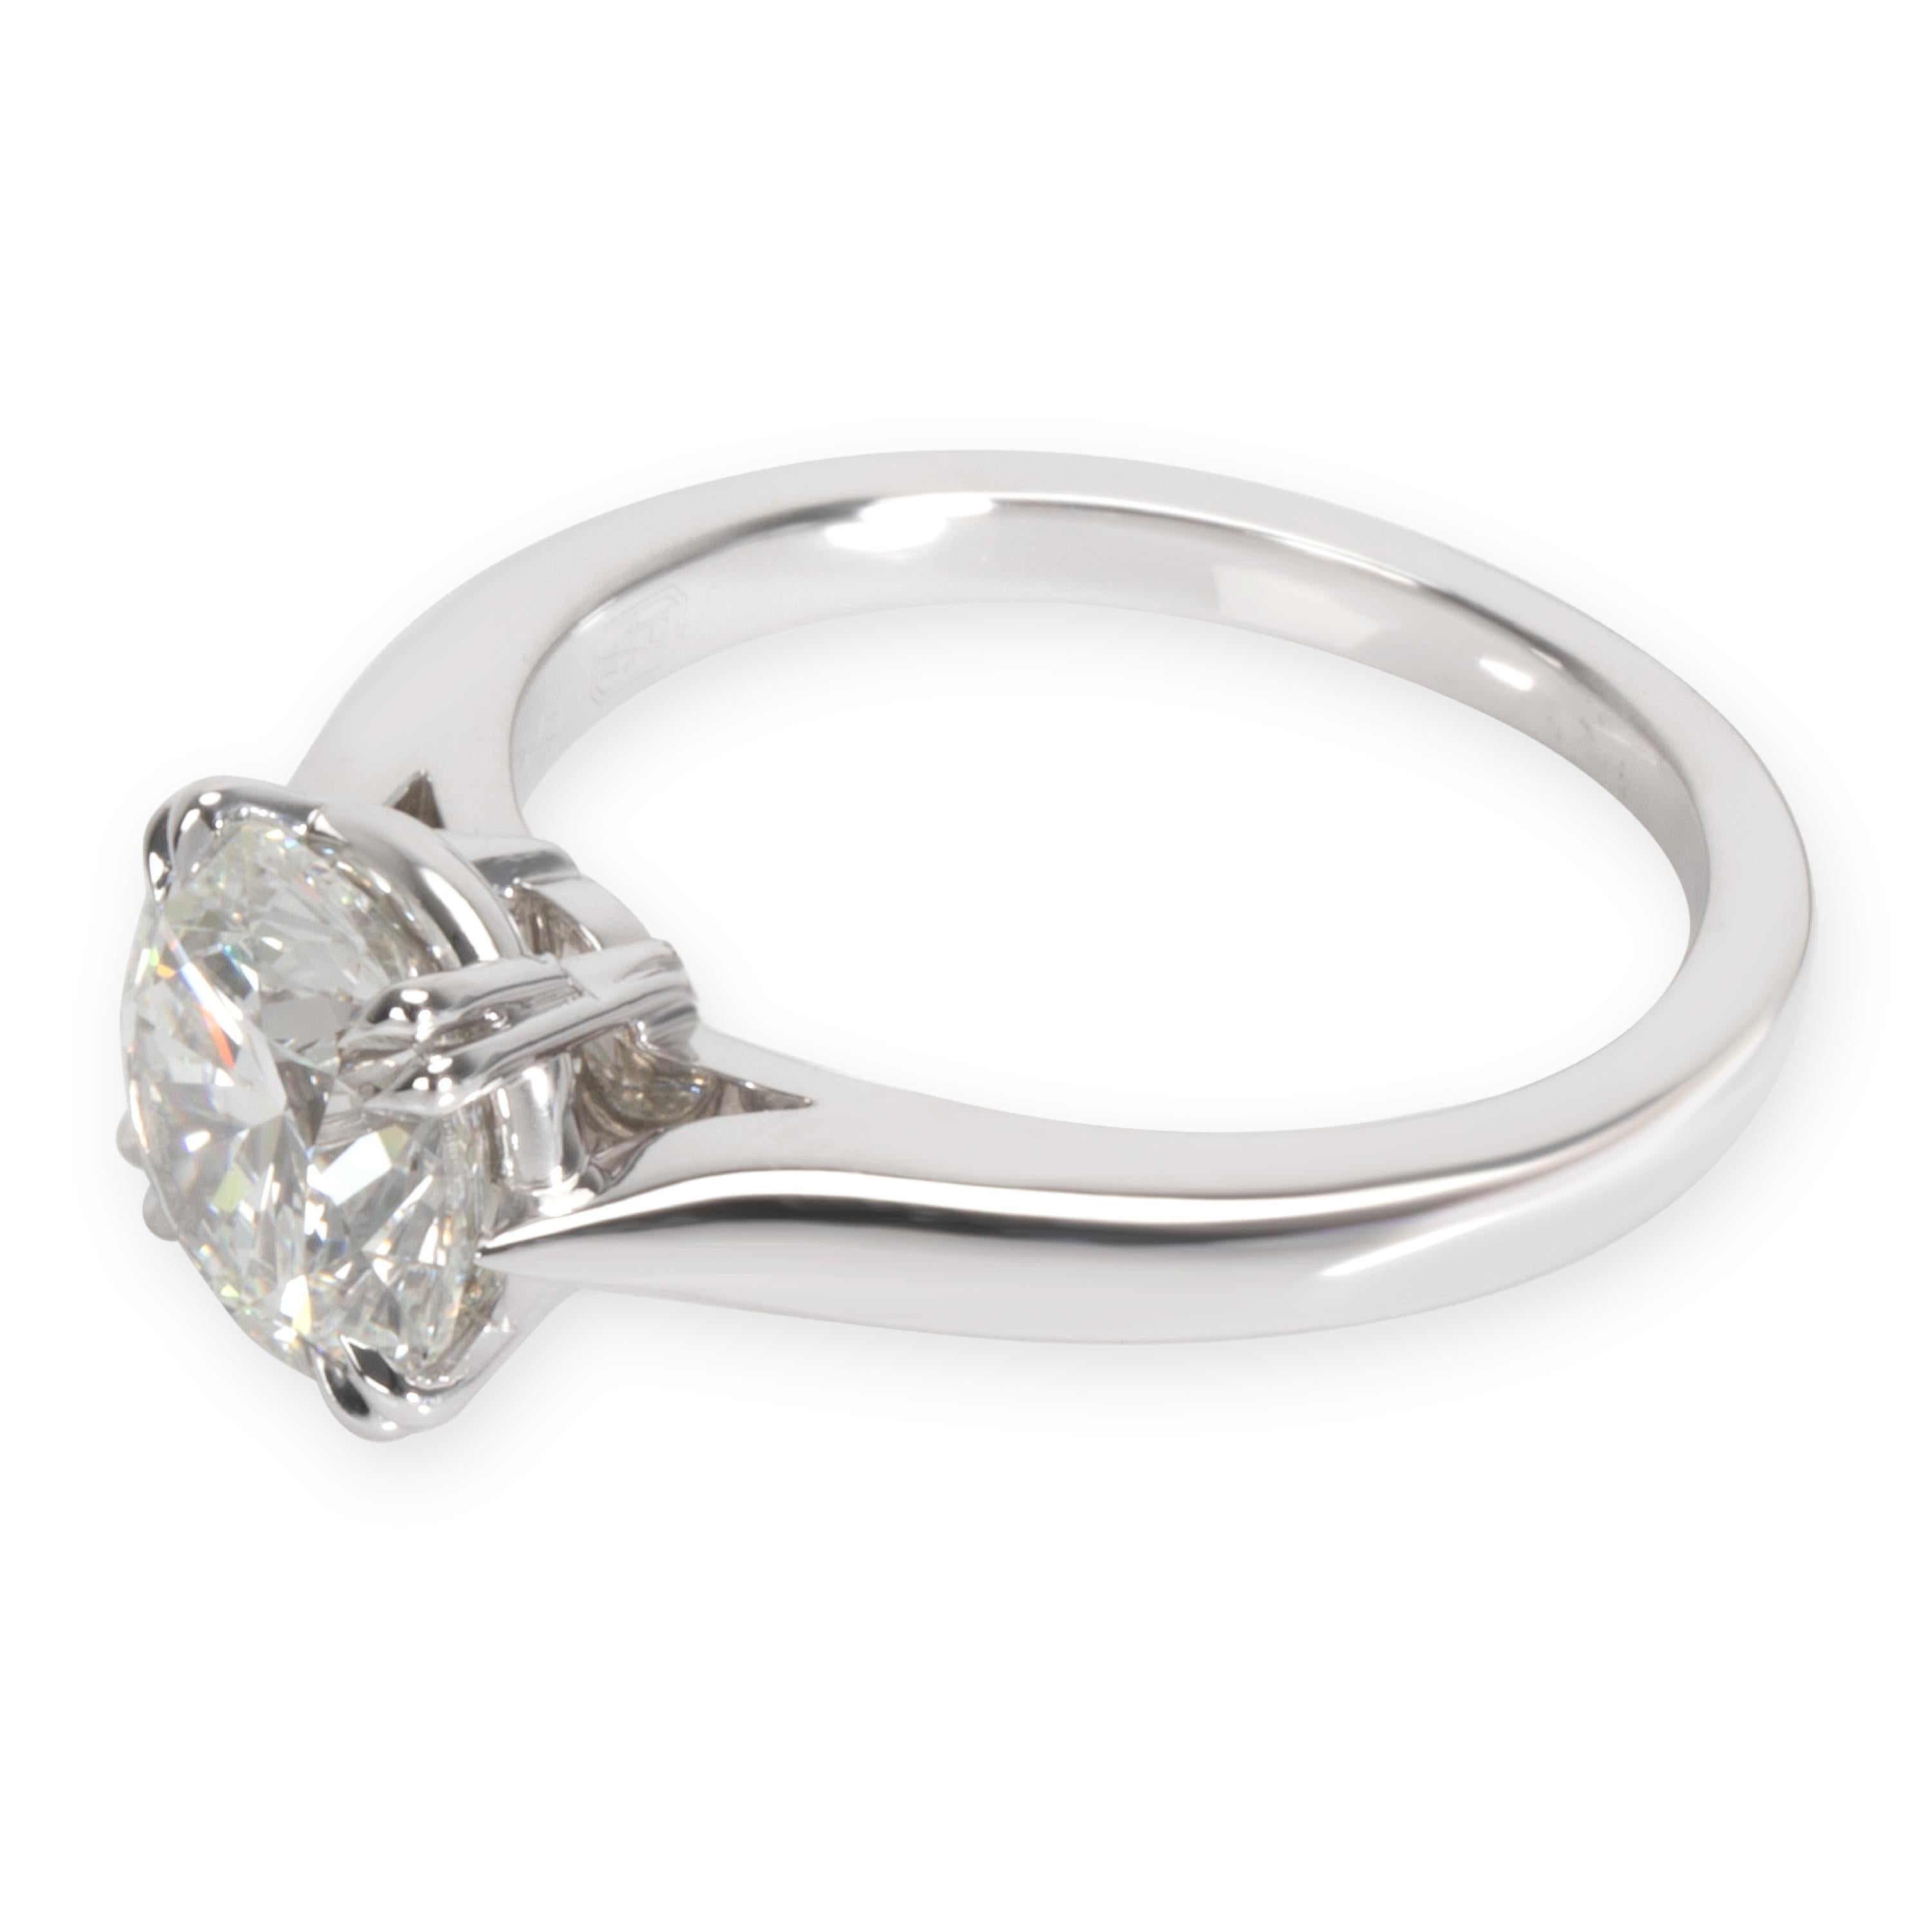 Round Cut Harry Winston Diamond Engagement Ring in Platinum GIA Certified F VS1 1.61